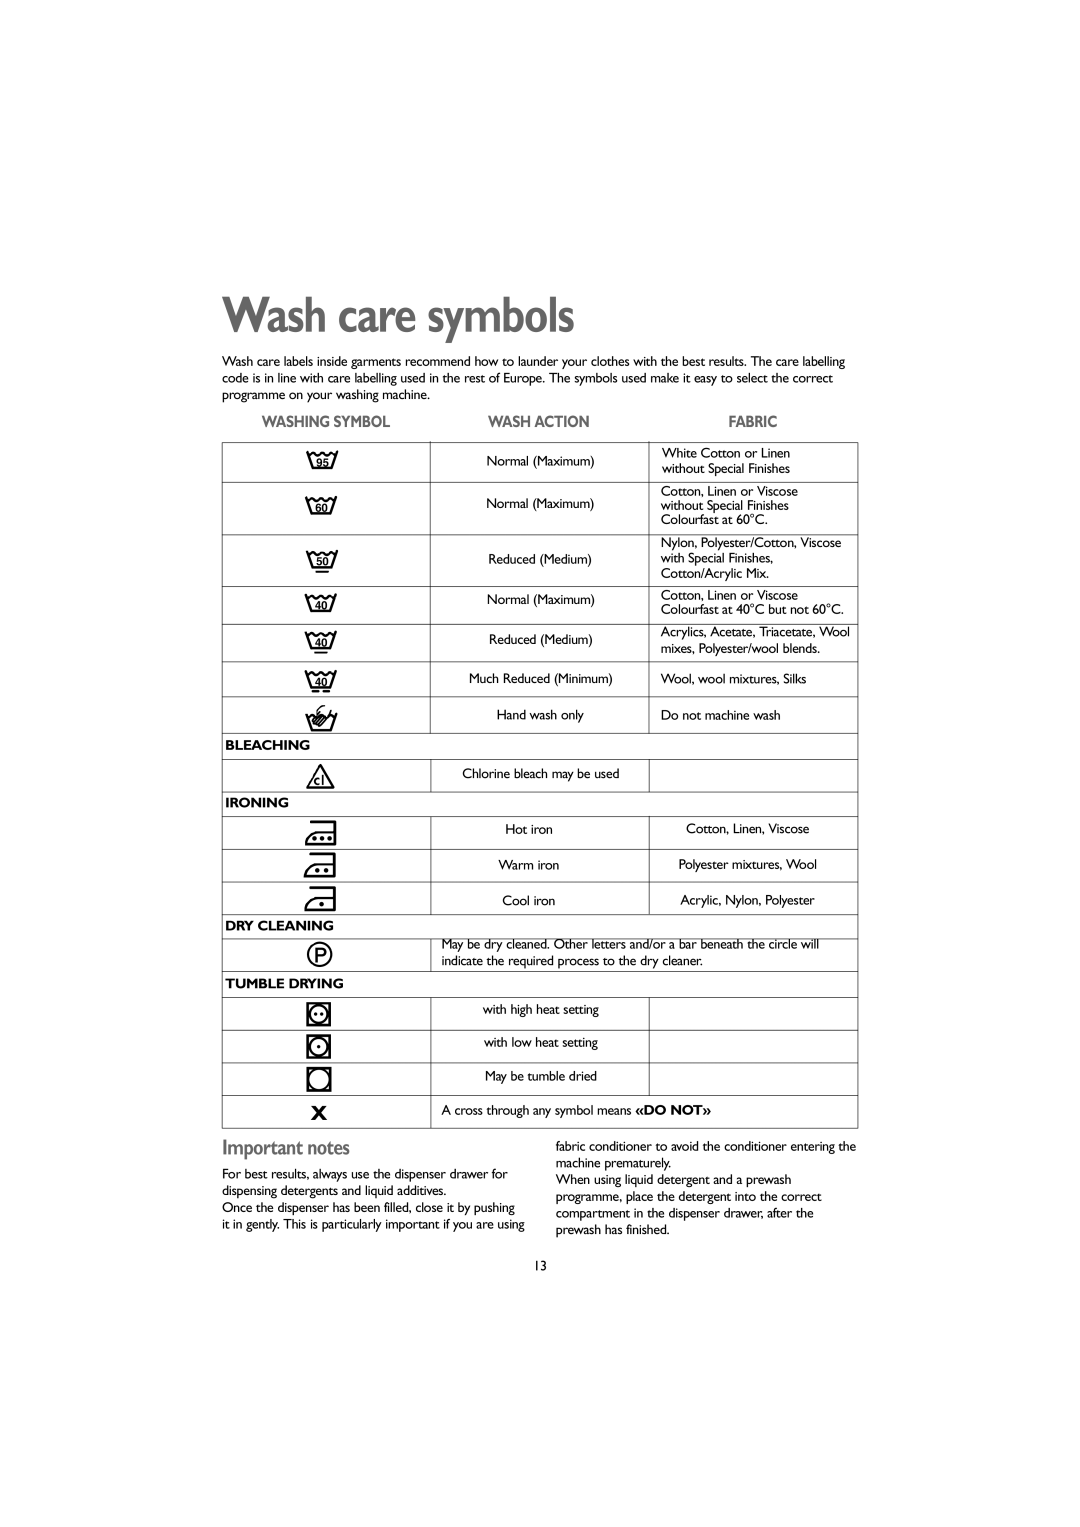 John Lewis JLWM 1406 instruction manual Wash care symbols, Important notes, Bleaching, Ironing, Dry Cleaning, Tumble Drying 